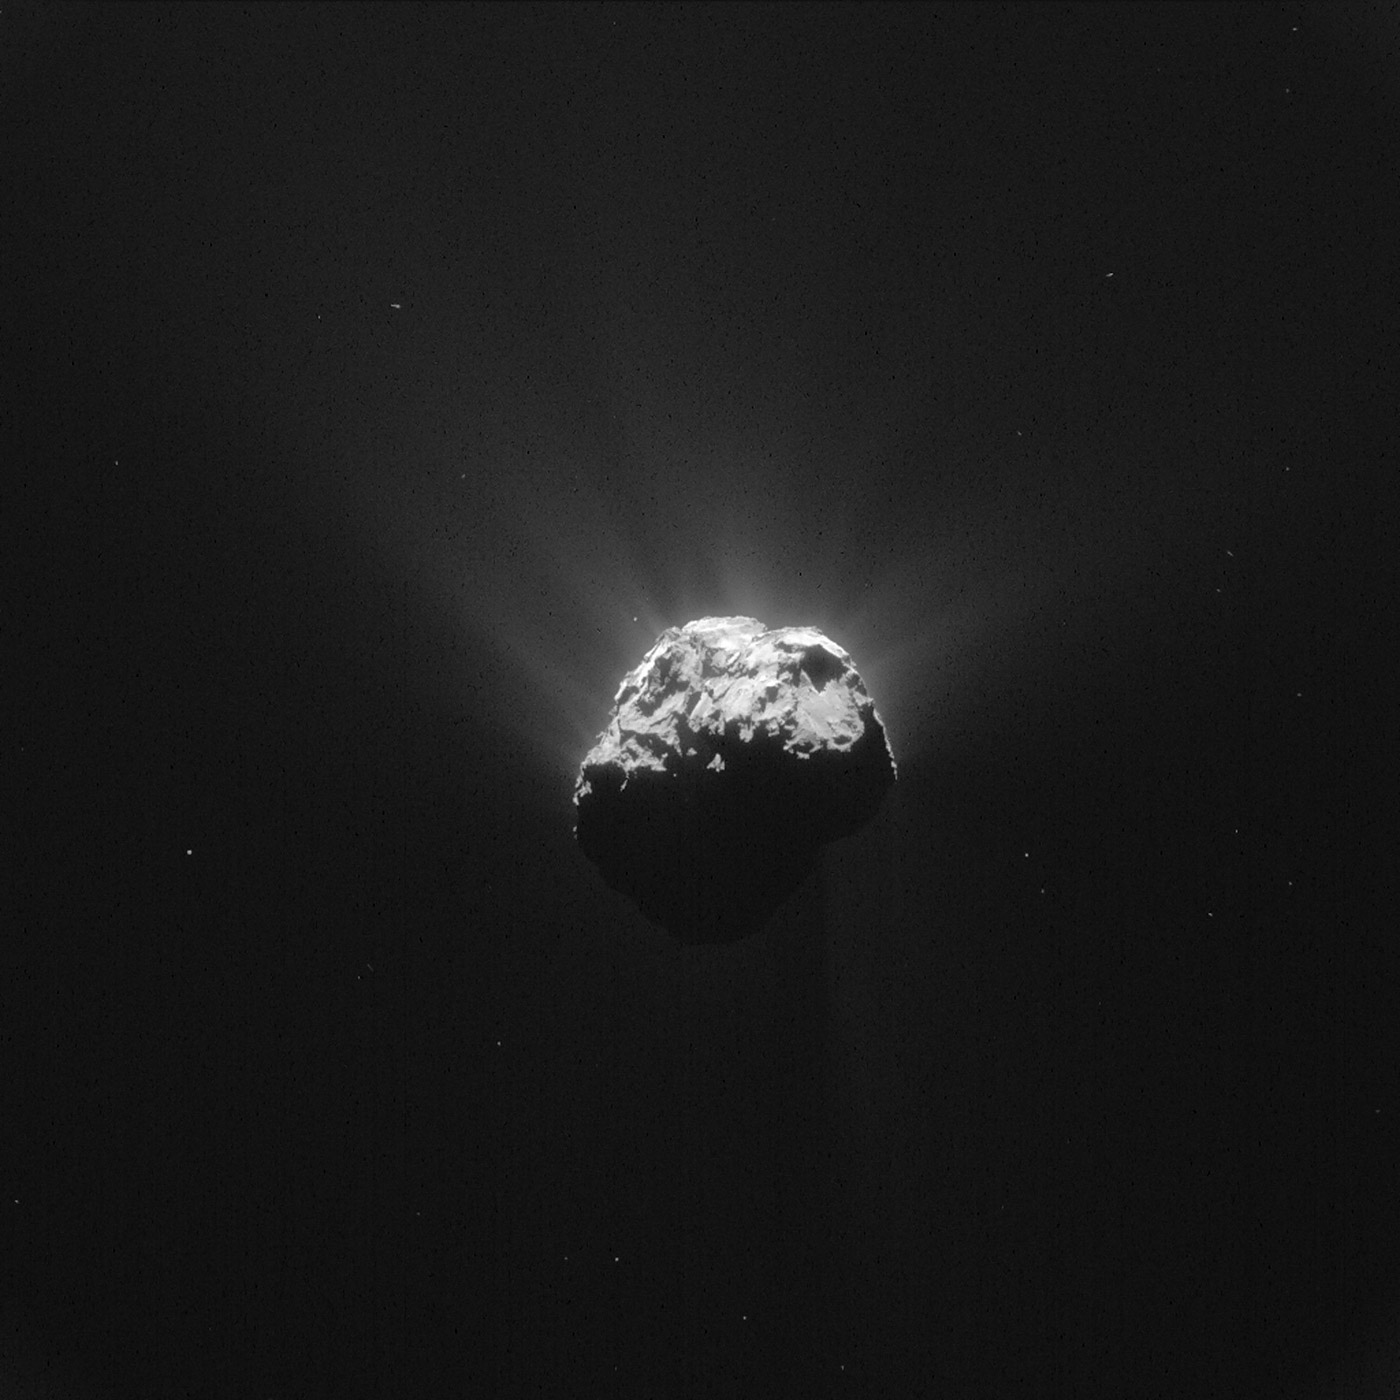 The Comet 67P/Churyumov-Gerasimenko is seen in an image taken by the Rosetta space probe on June 13, 2015. (ESA/Reuters)